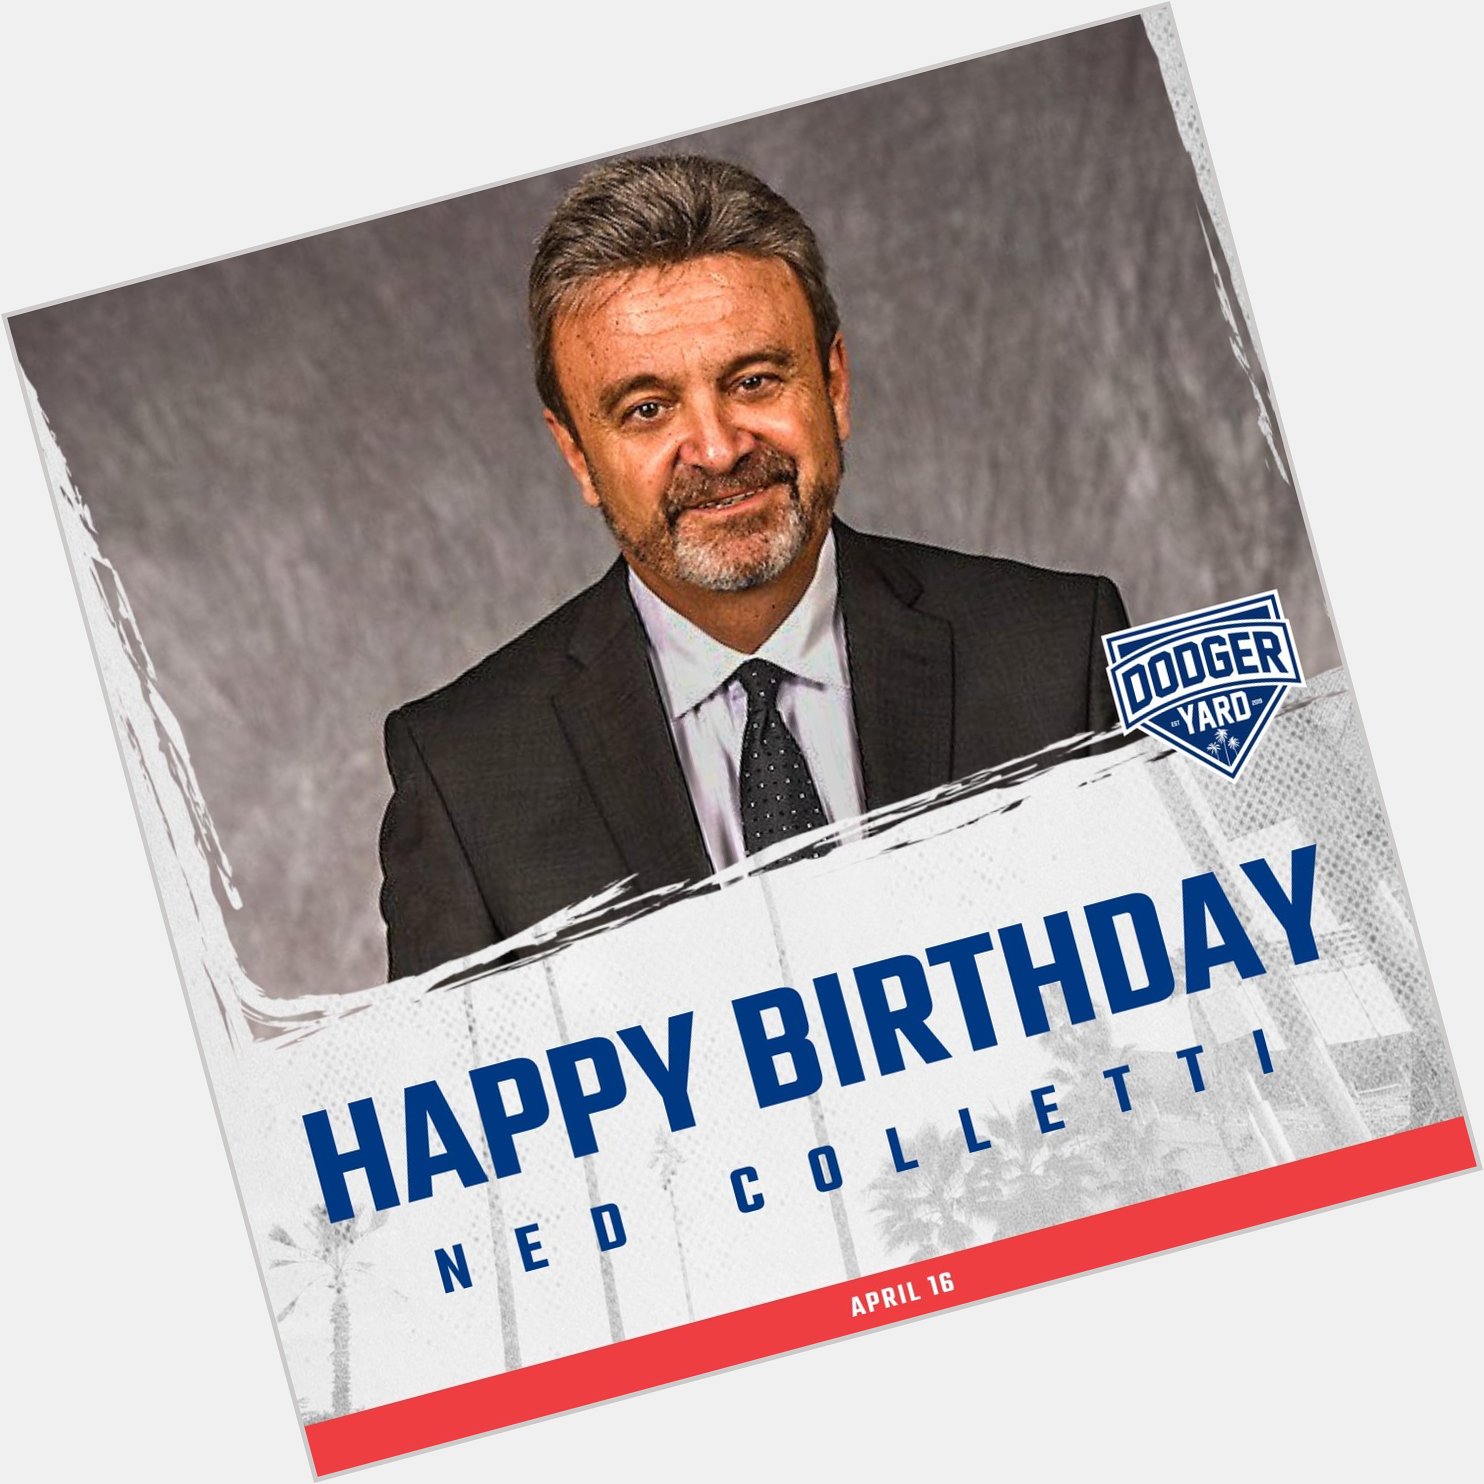 Happy birthday, Ned Colletti! 